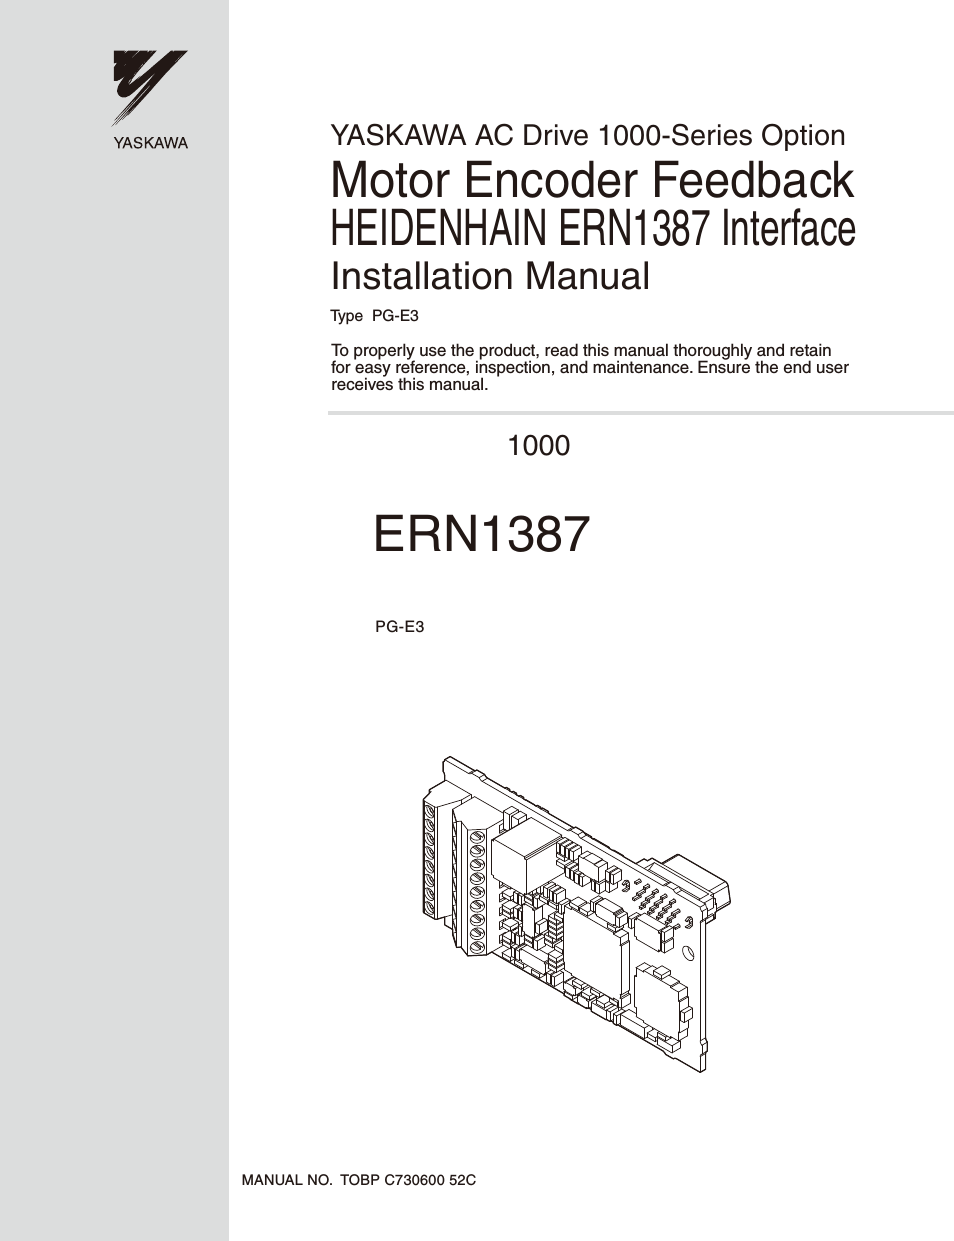 1000-Series Option PG-E3 Motor Encoder Feedback